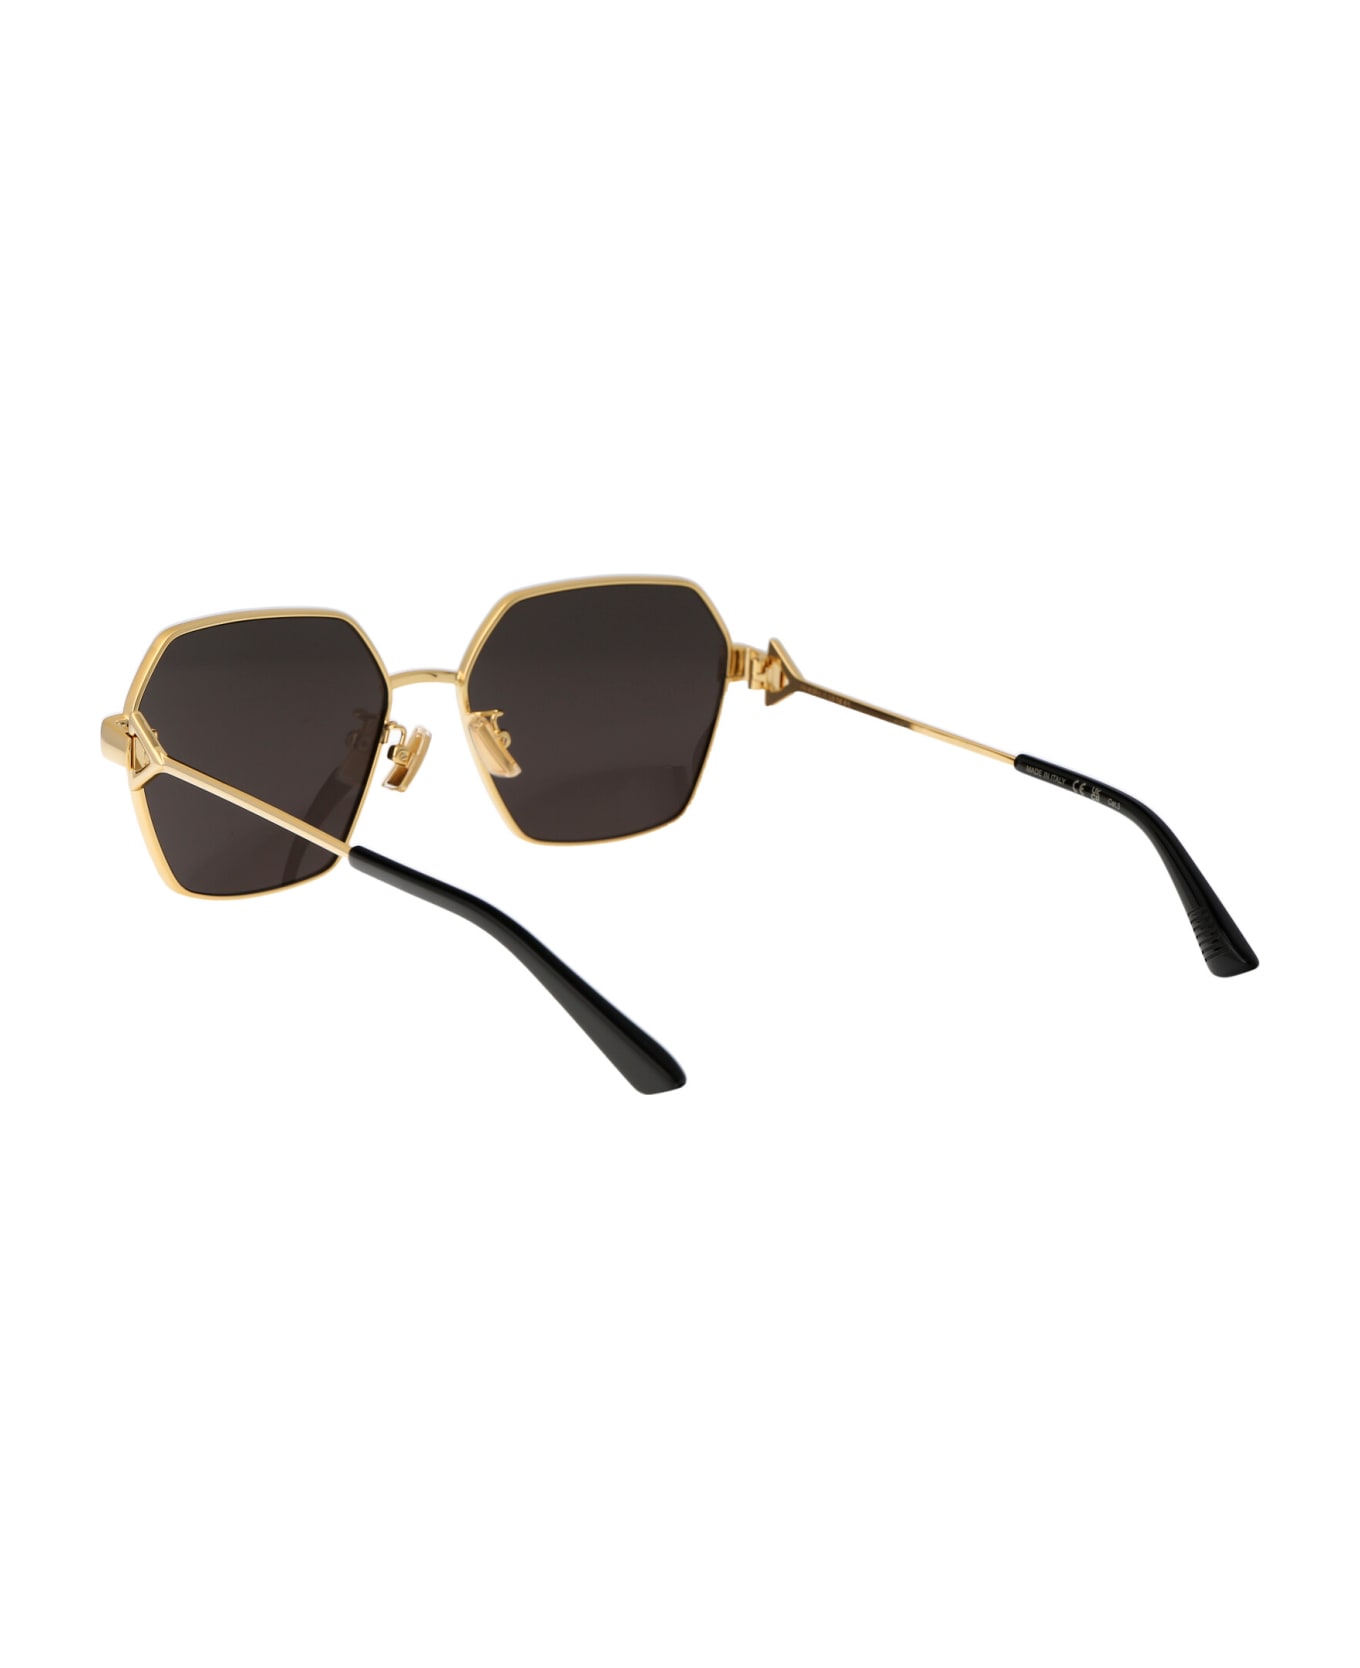 Bottega Veneta Eyewear Bv1224s Sunglasses - 002 GOLD GOLD GREY